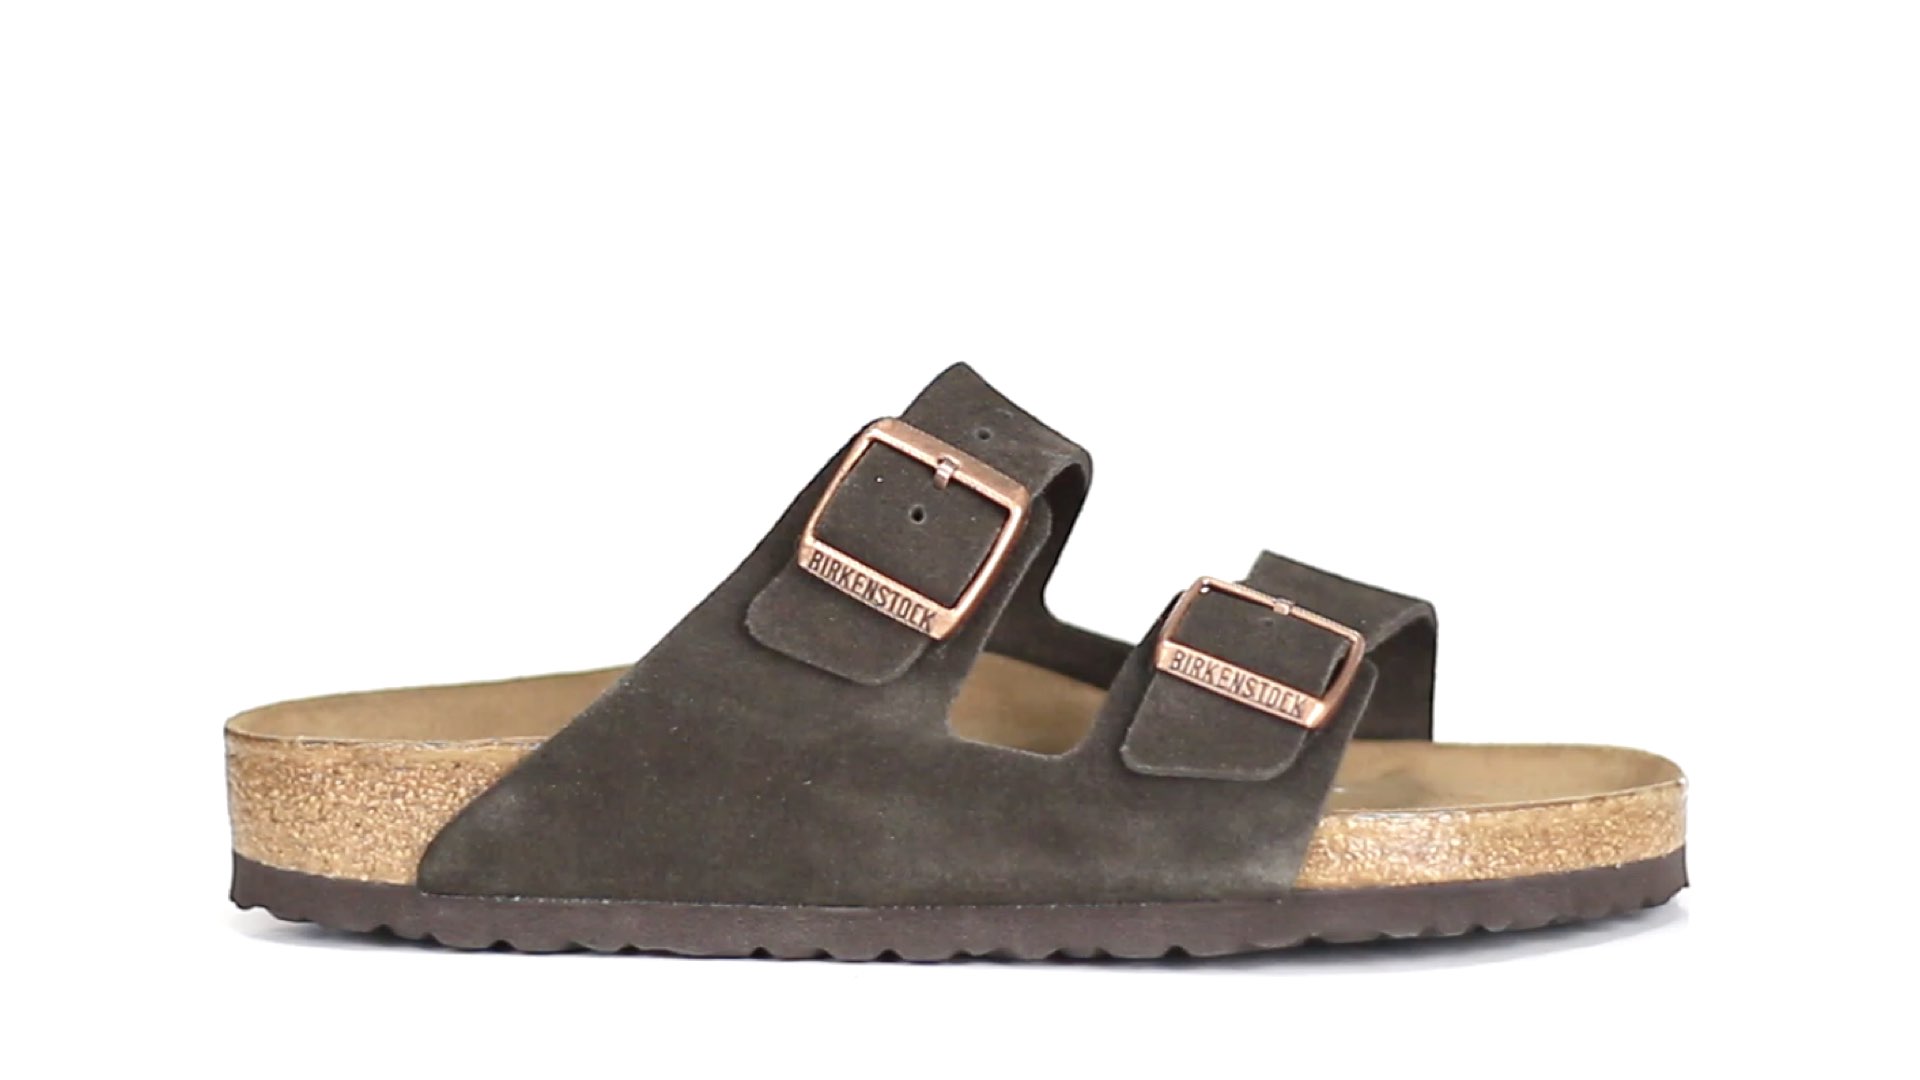 043 Birkenstock buckle sandals from side